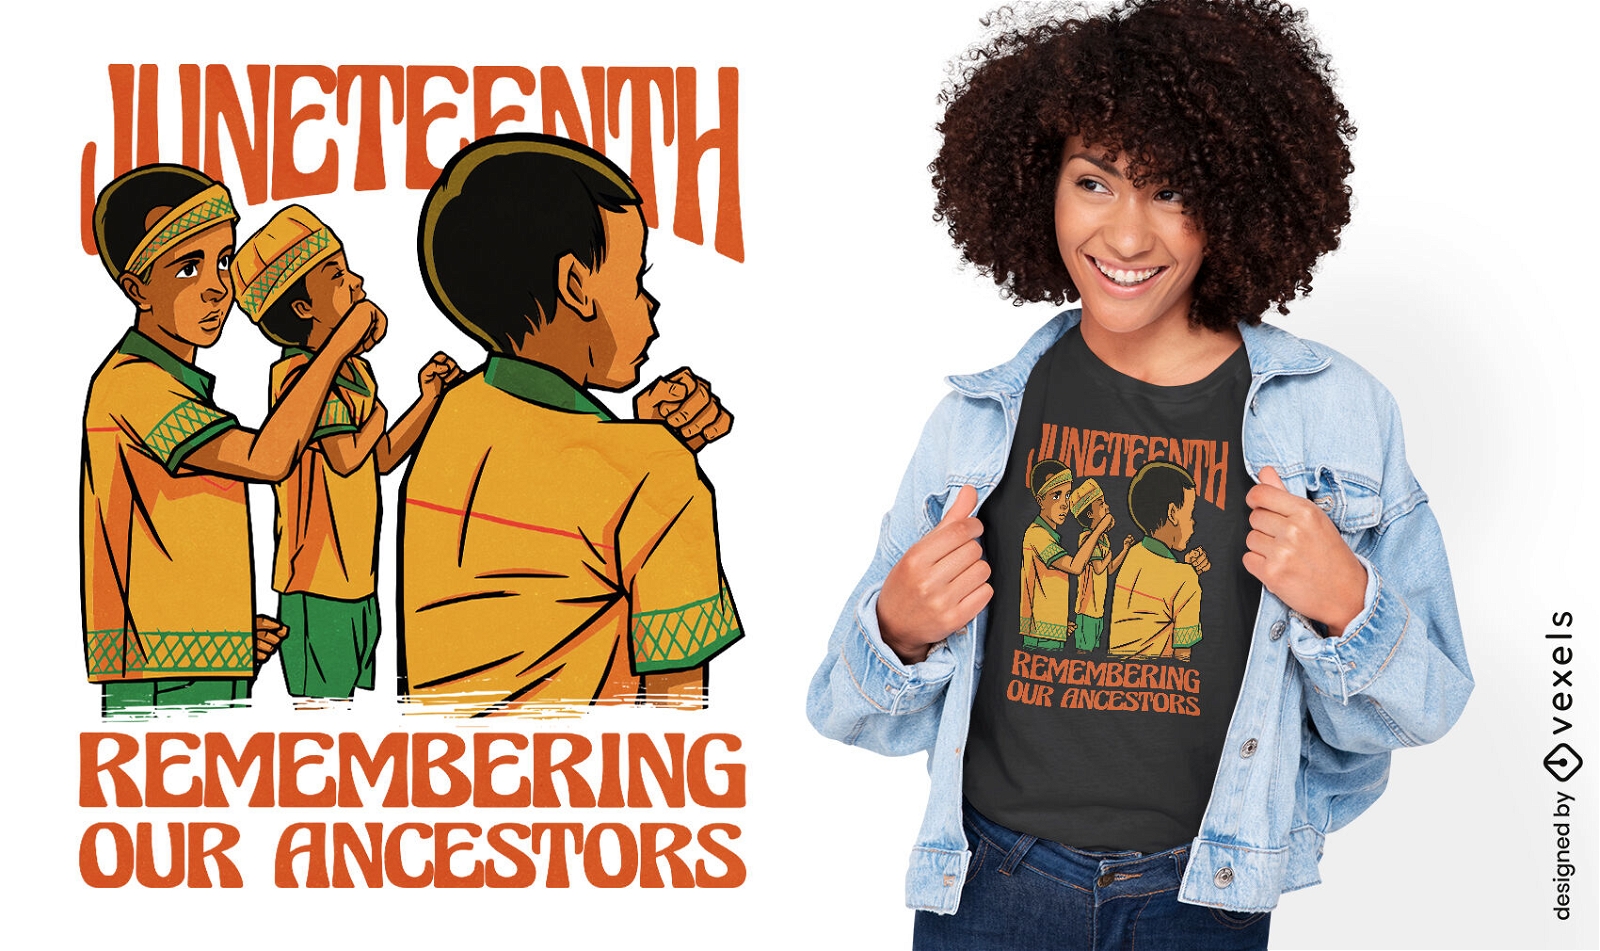 Juneteenth ancestors quote t-shirt design